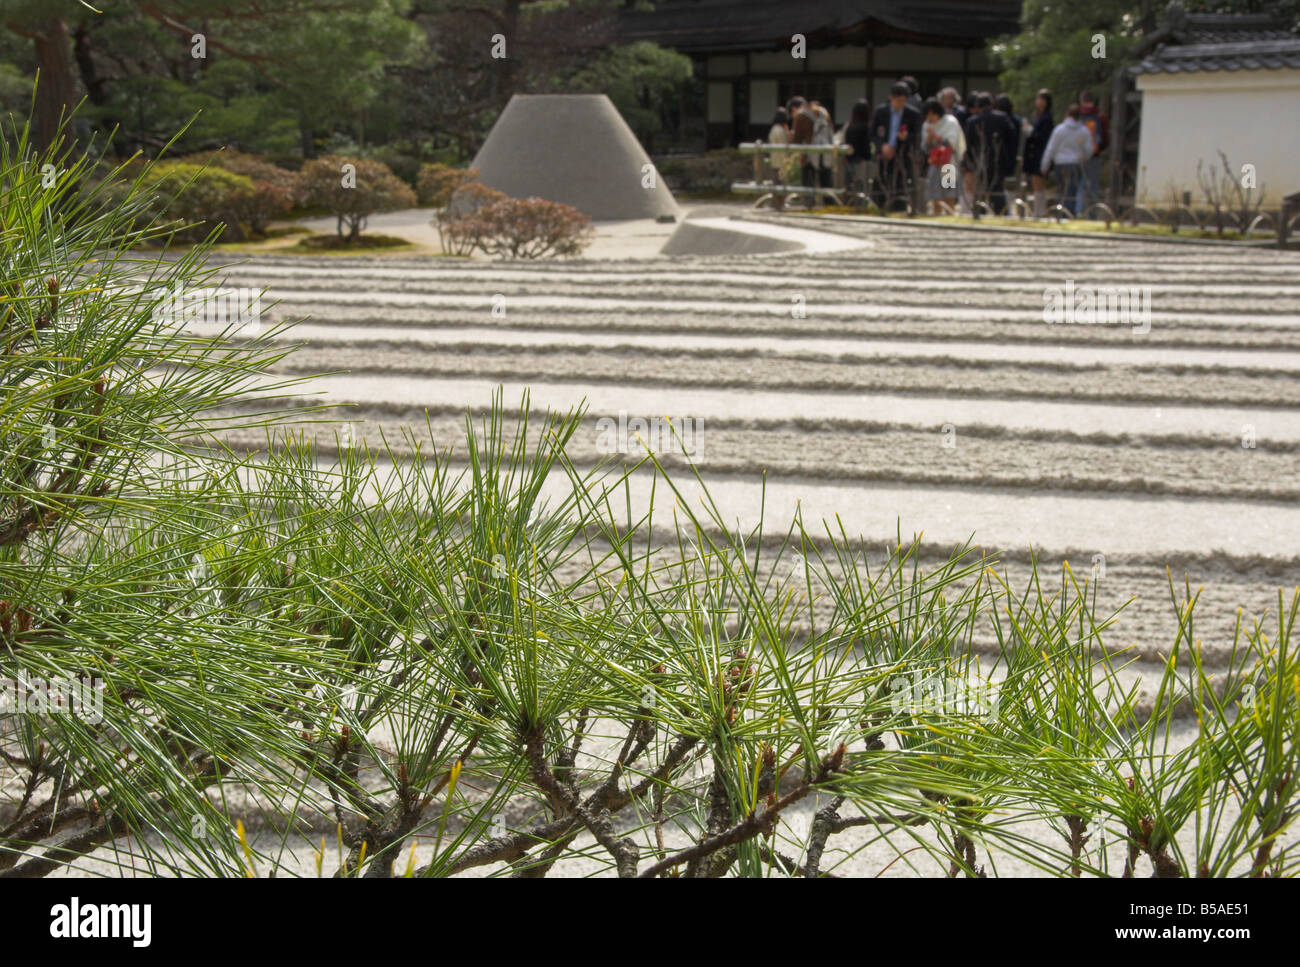 Zen garden symbolizing Mount Fuji and the sea, Silver Pavilion, Ginkaku ji temple, Kyoto, Kansai, Honshu, Japan Stock Photo